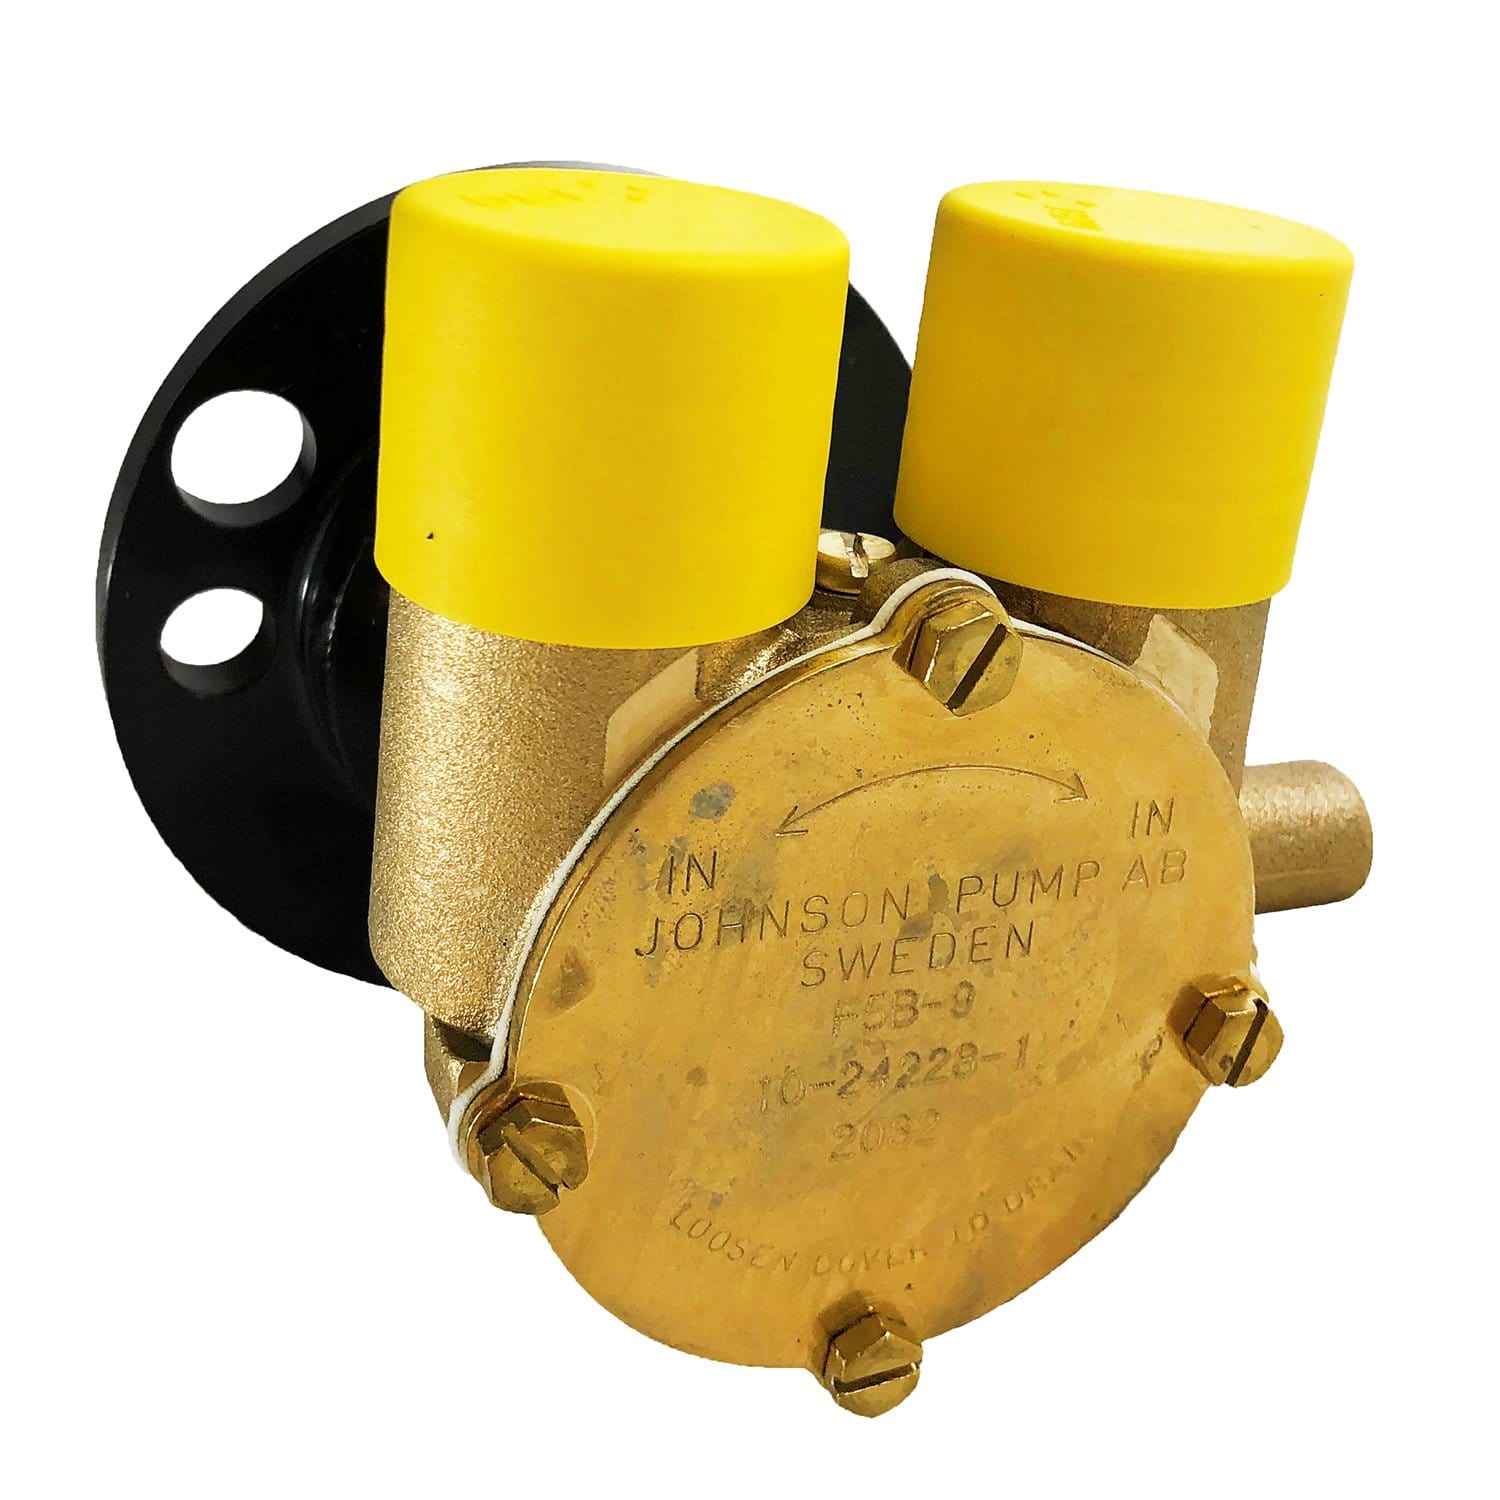 Johnson Pump 10-24228-1 F5b-9 Impeller Pump HS Crankshaft